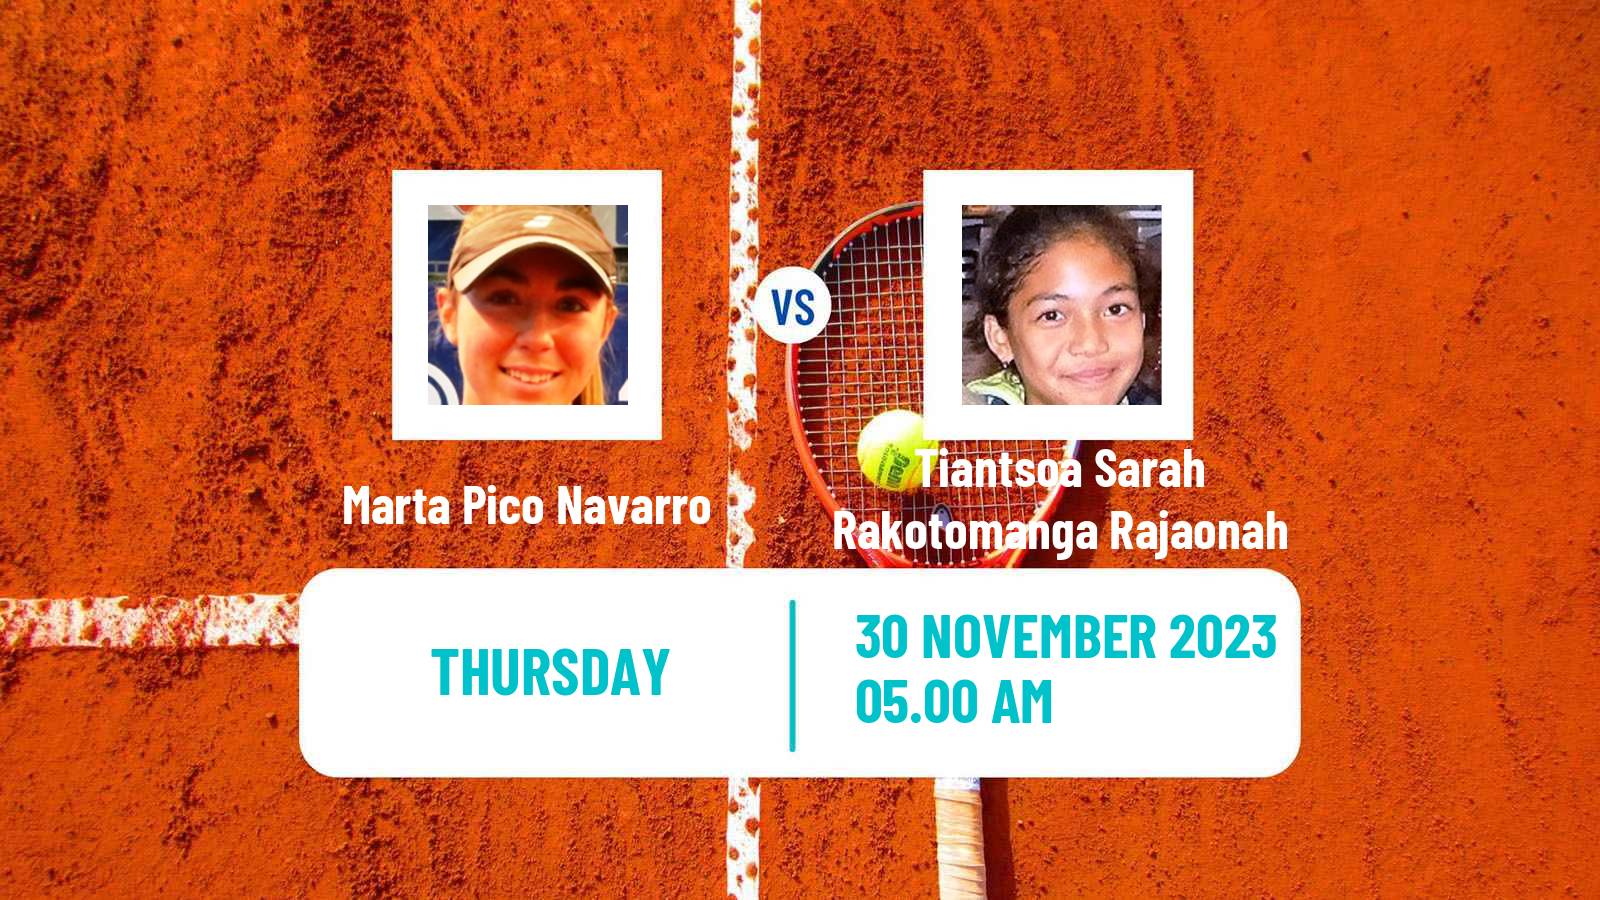 Tennis ITF W15 Valencia Women Marta Pico Navarro - Tiantsoa Sarah Rakotomanga Rajaonah